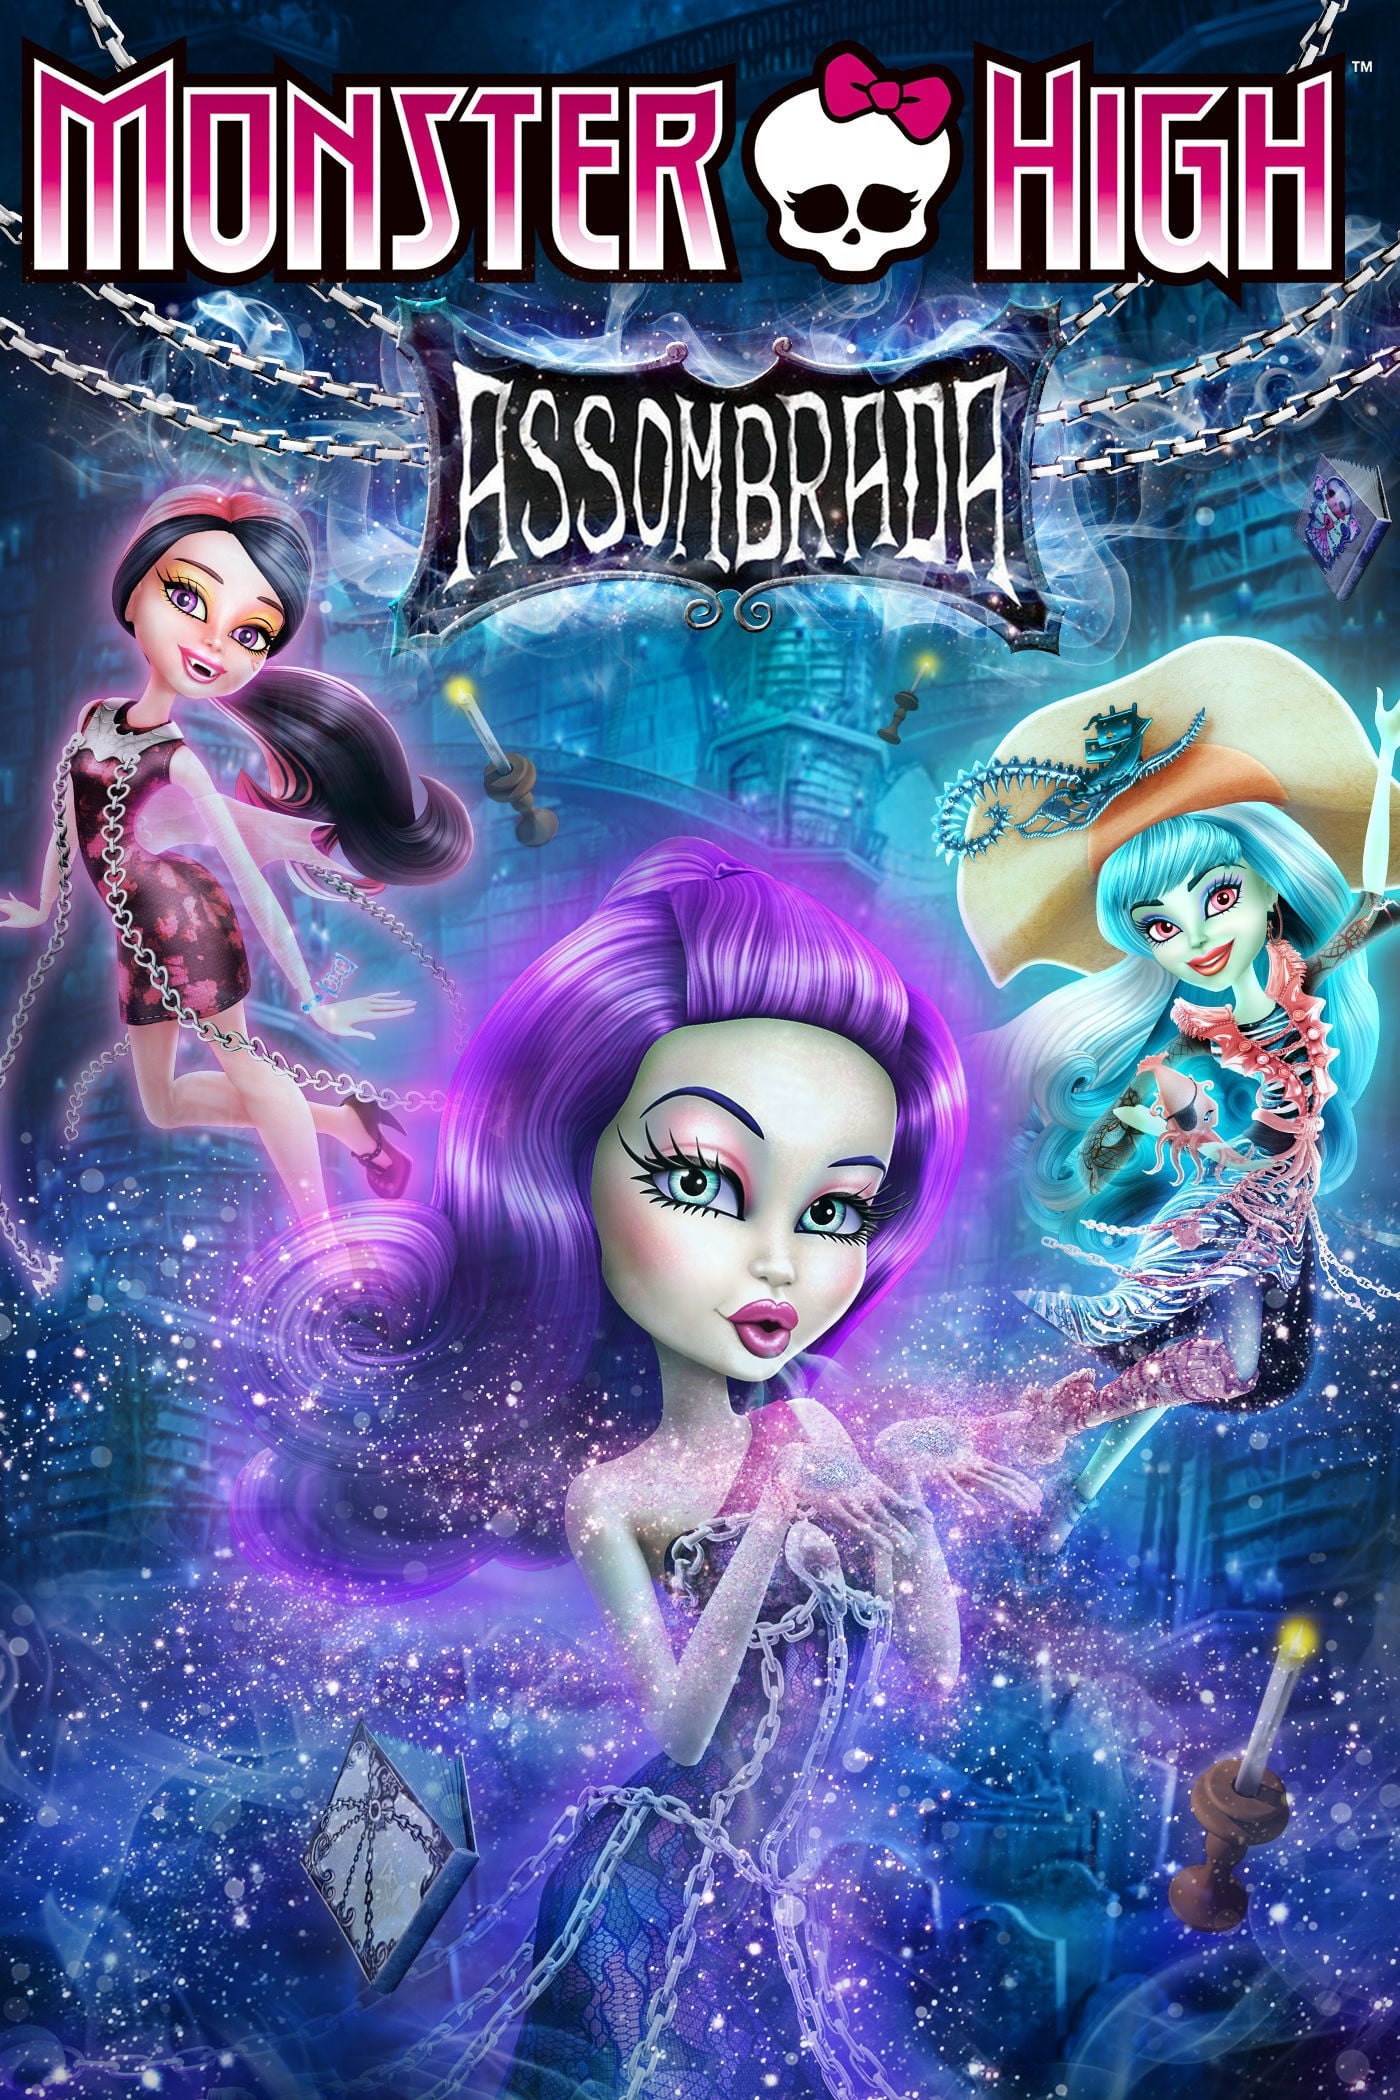 Assistir Monster High: Monster Fusion (2014) Online Dublado Full HD